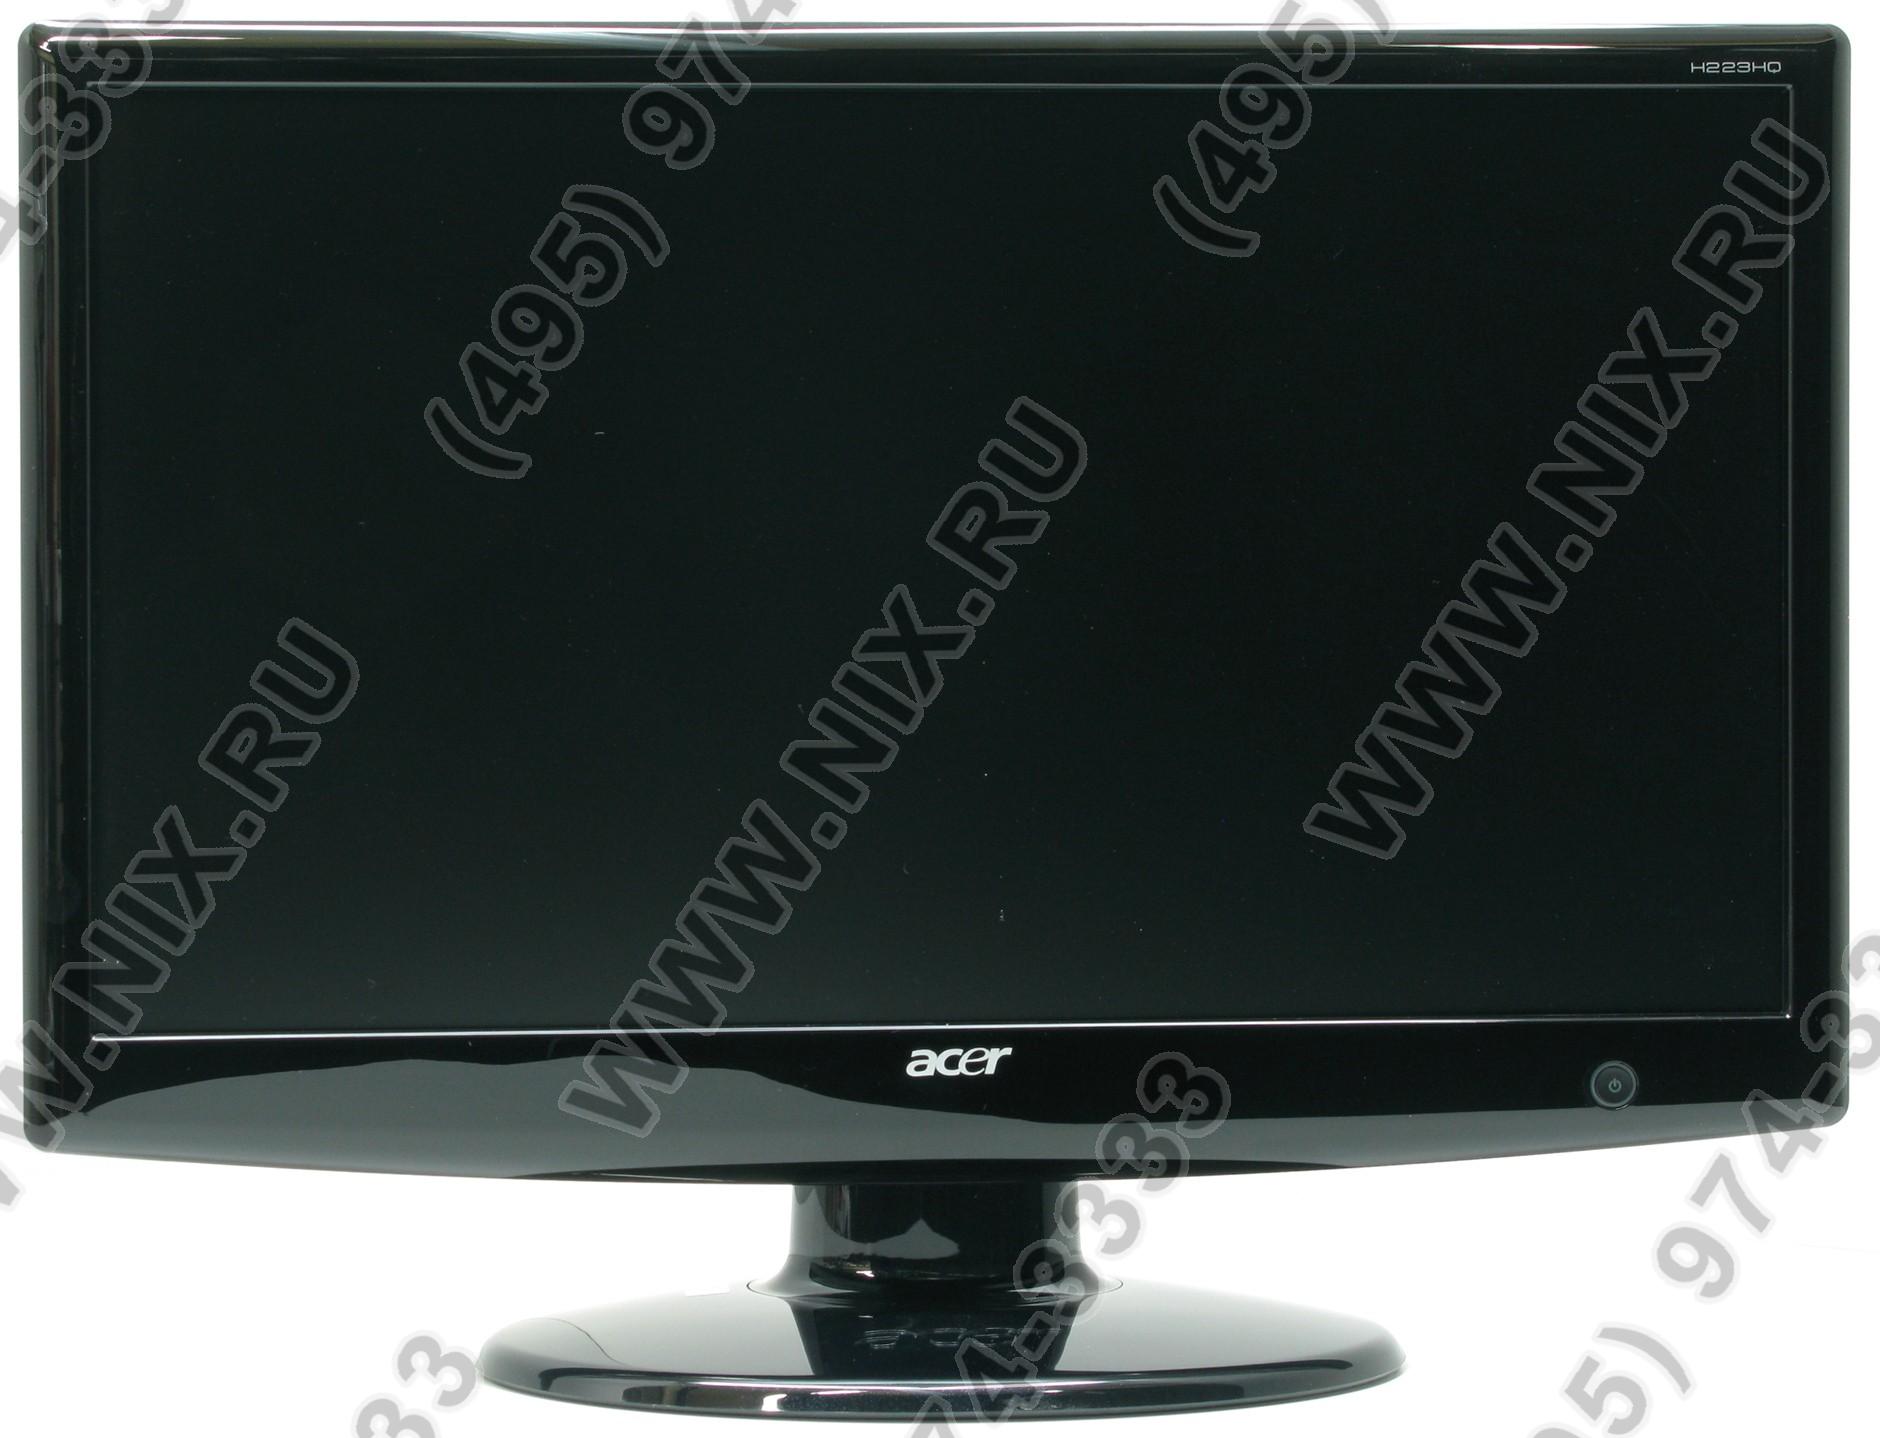  -285 TL-ACER H223HQ 21.5'' LCD Wide Screen MONİTÖR 2 MS, DVI, HDMI, Full HD - Ufak bir değerlendirme